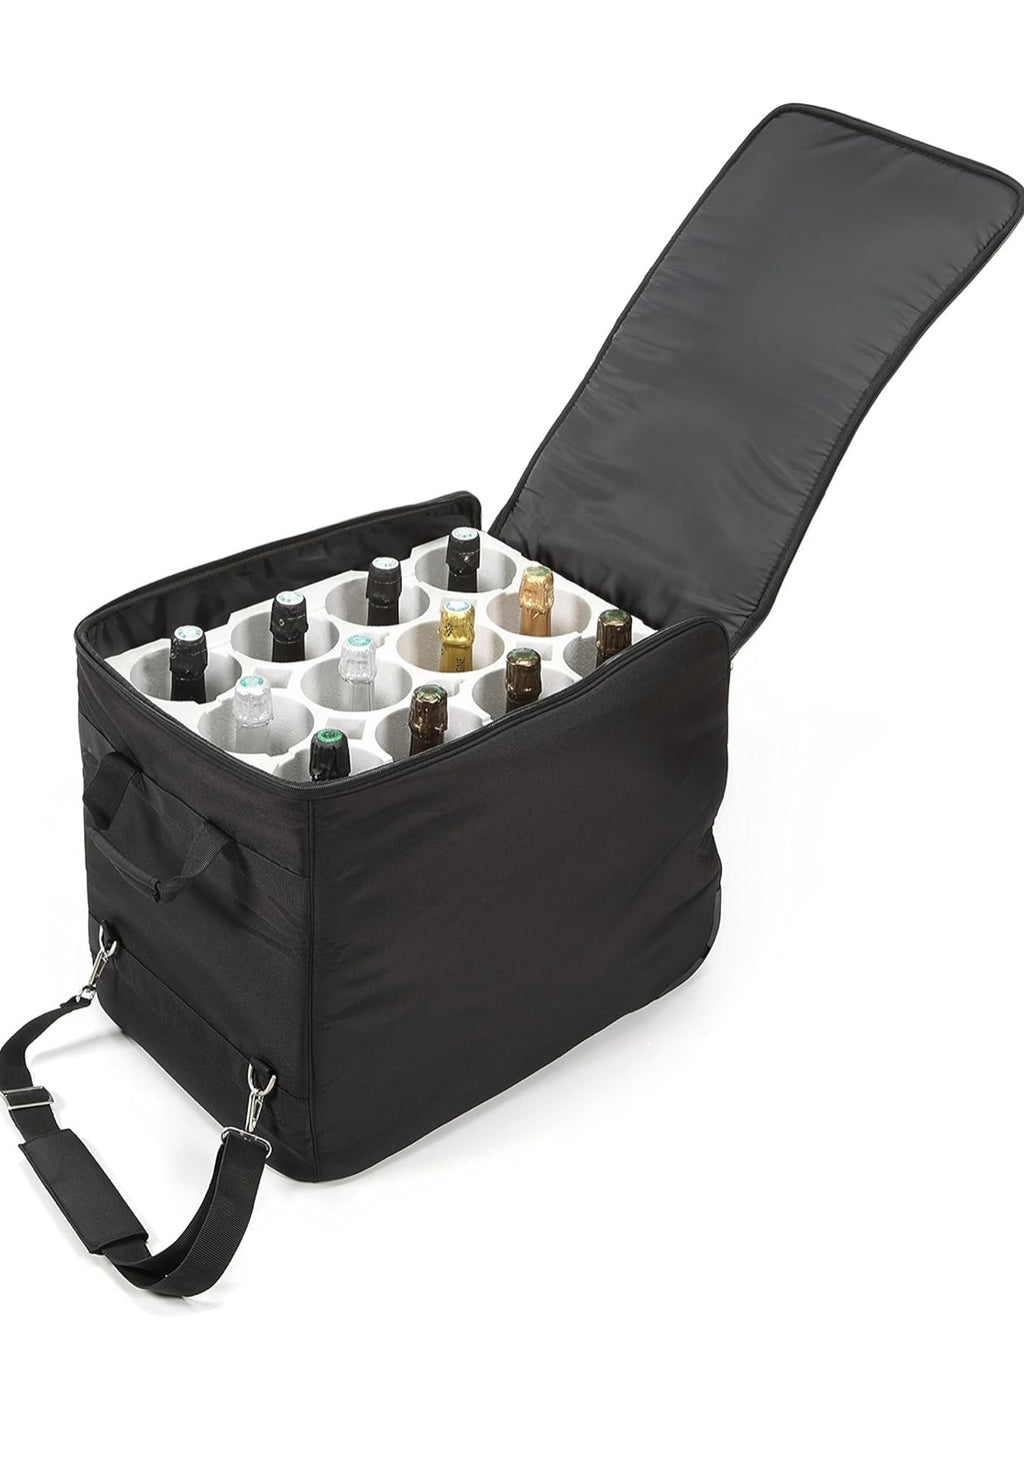 “Tour de France” wine selection + Black wine luggage 